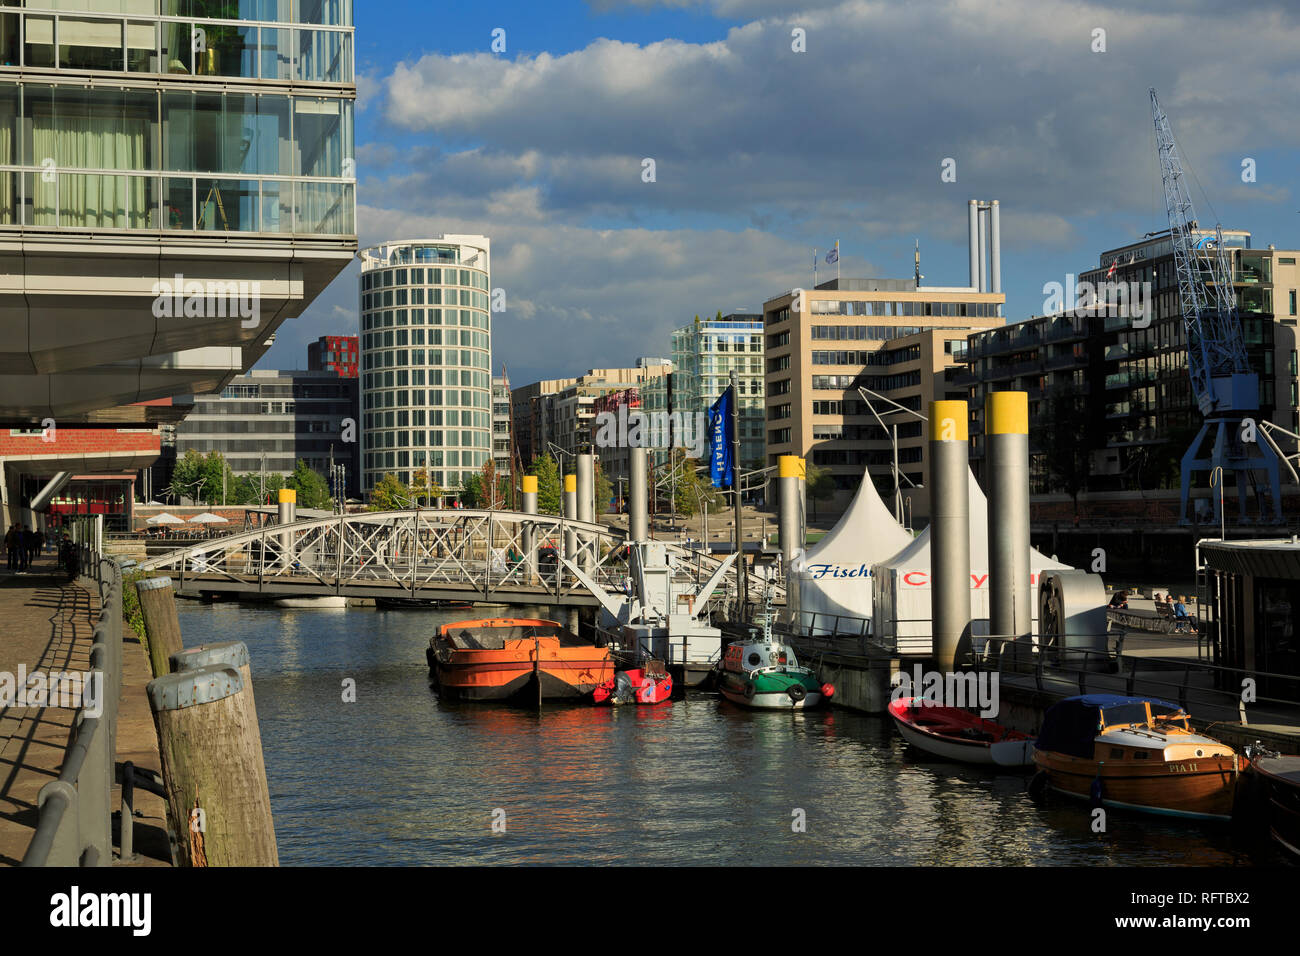 Historic boats, HafenCity District, Hamburg, Germany, Europe Stock Photo